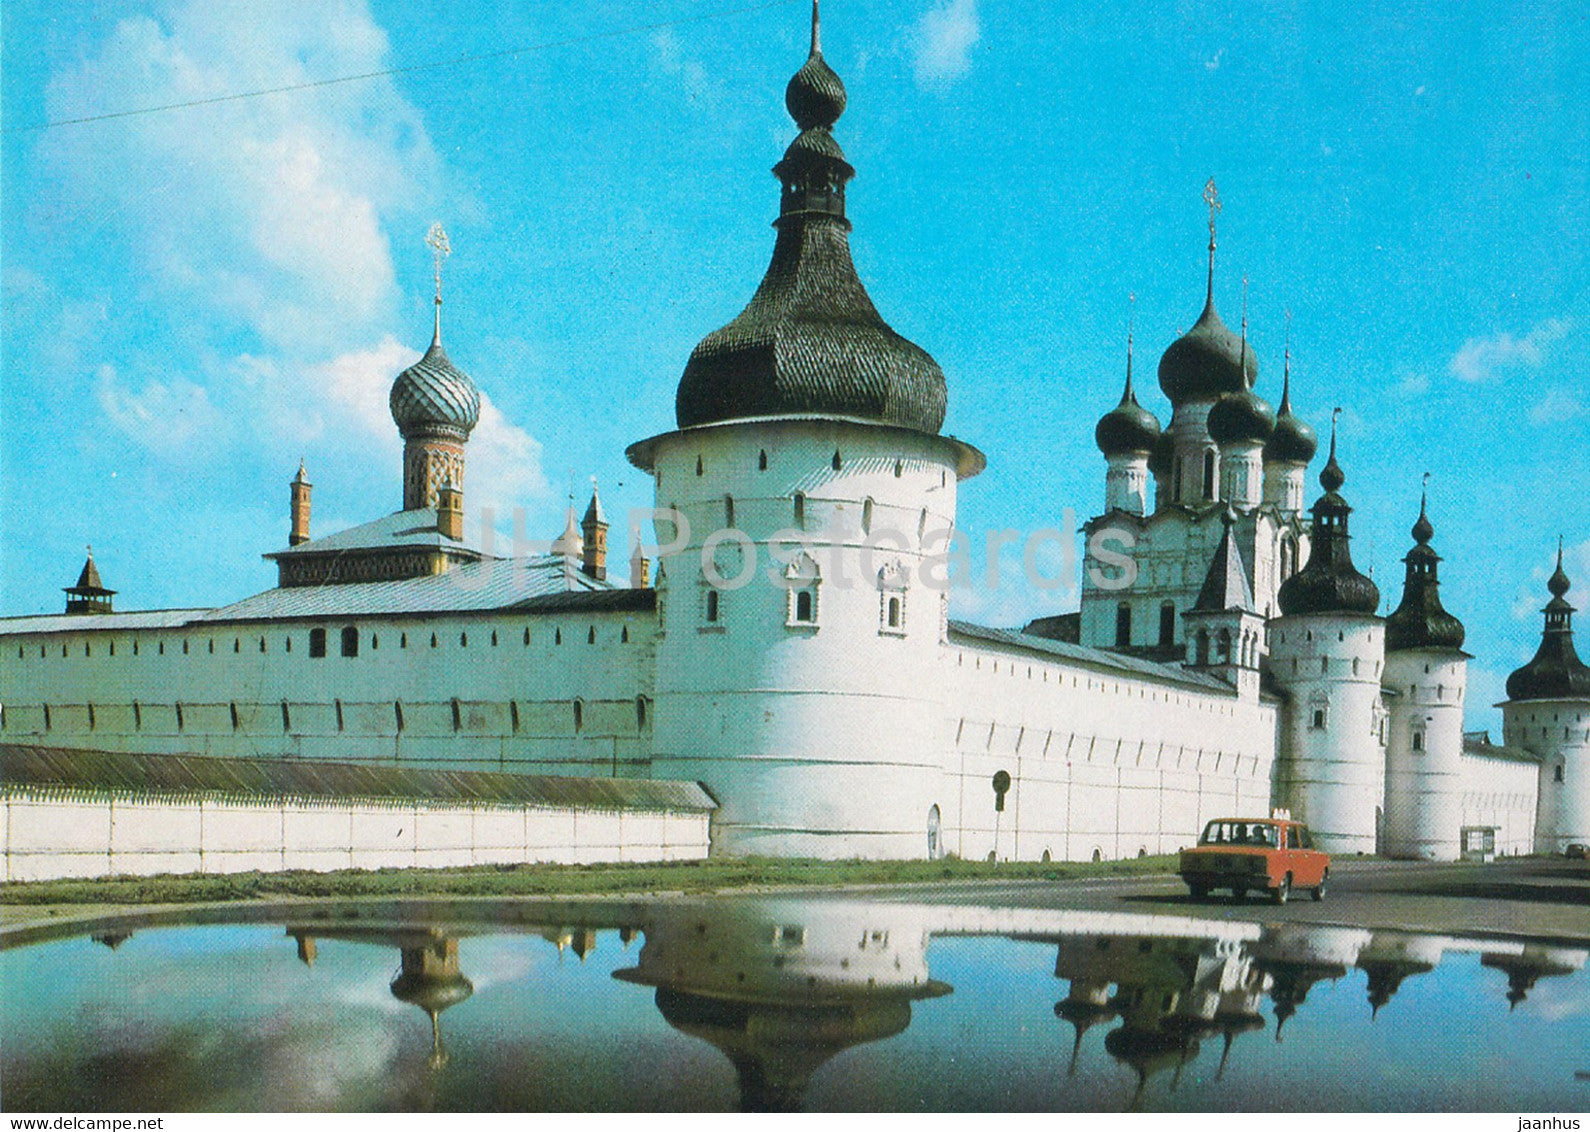 Rostov Veliky - Walls and Towers of Rostov Kremlin - car Zhiguli - 1984 - Russia USSR - unused - JH Postcards